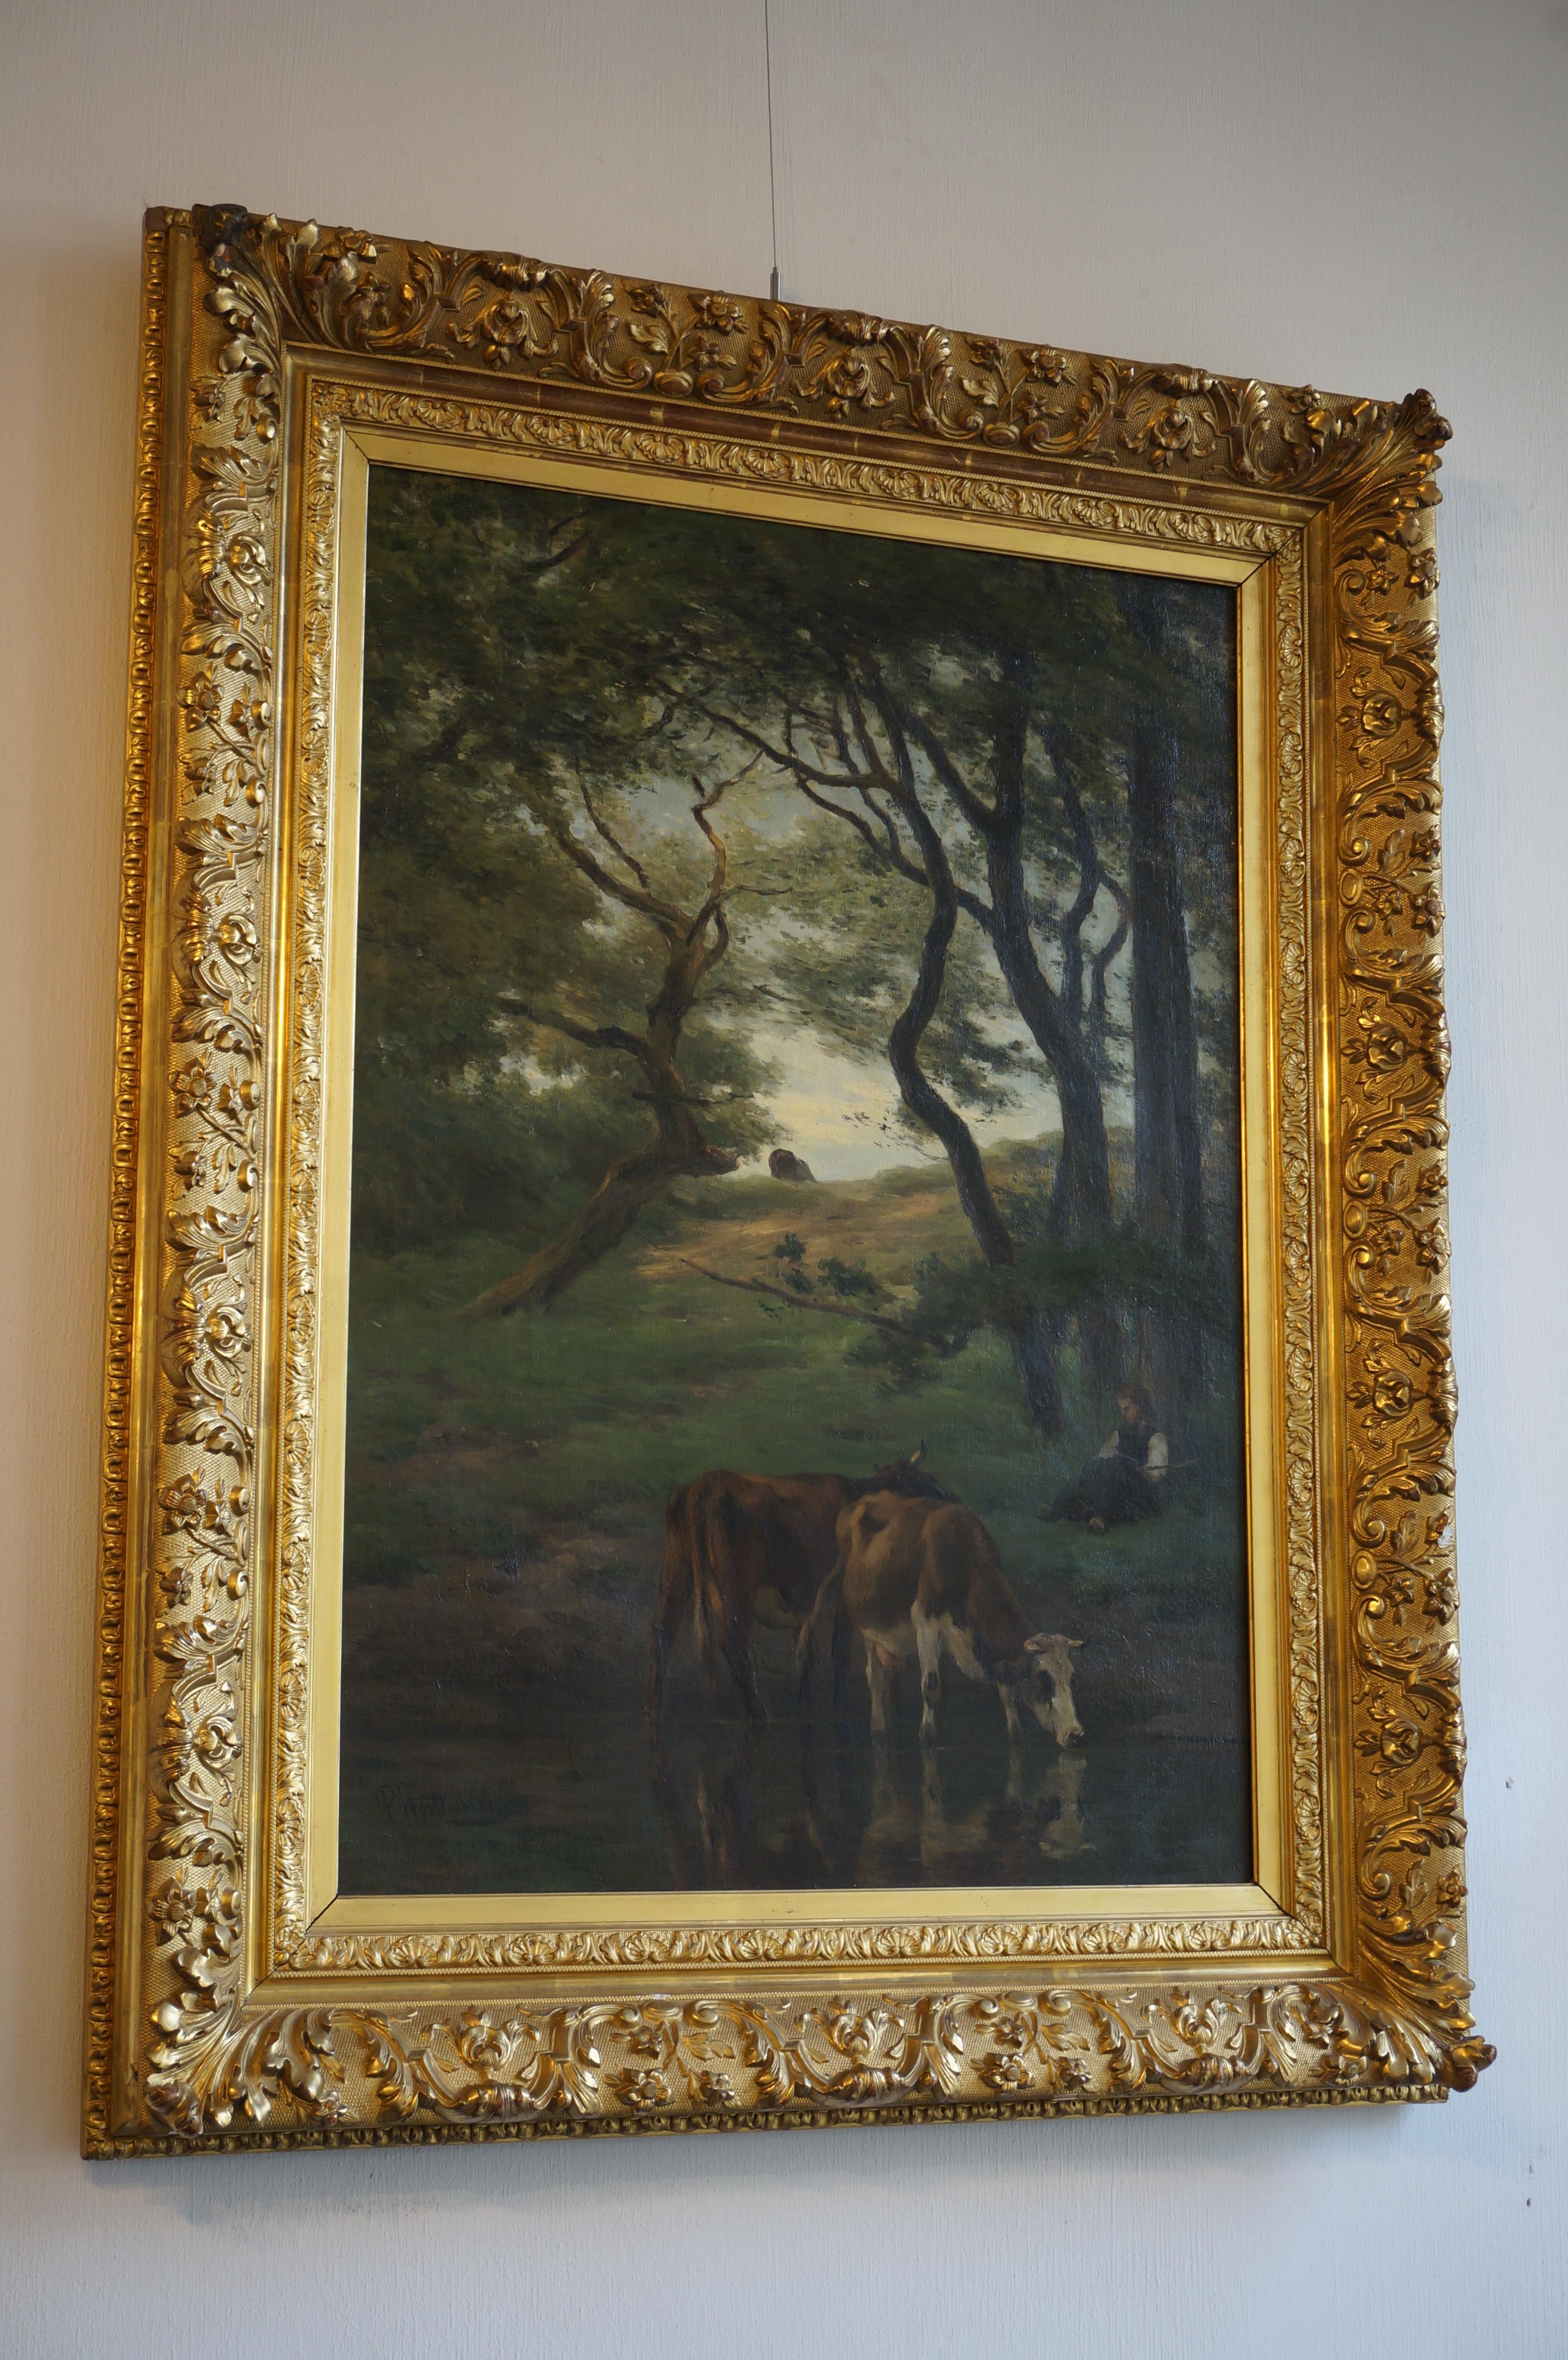 Cows in landscape - Black Landscape Painting by Pieter Stortenbeker